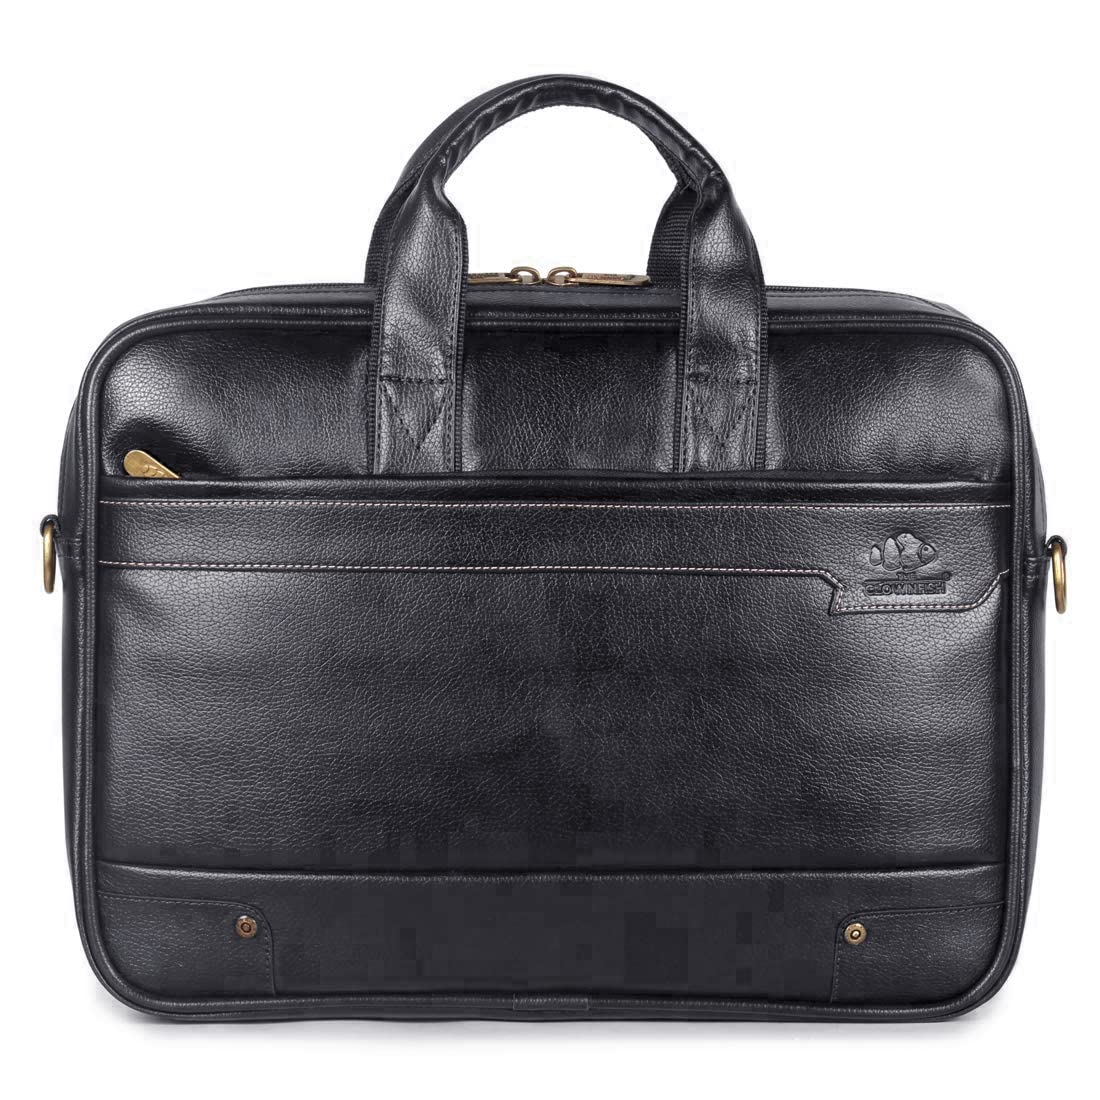 THE CLOWNFISH Unisex-Adult Faux Leather 15.6 Inch Utility Laptop Messenger Bag Briefcase (Black)